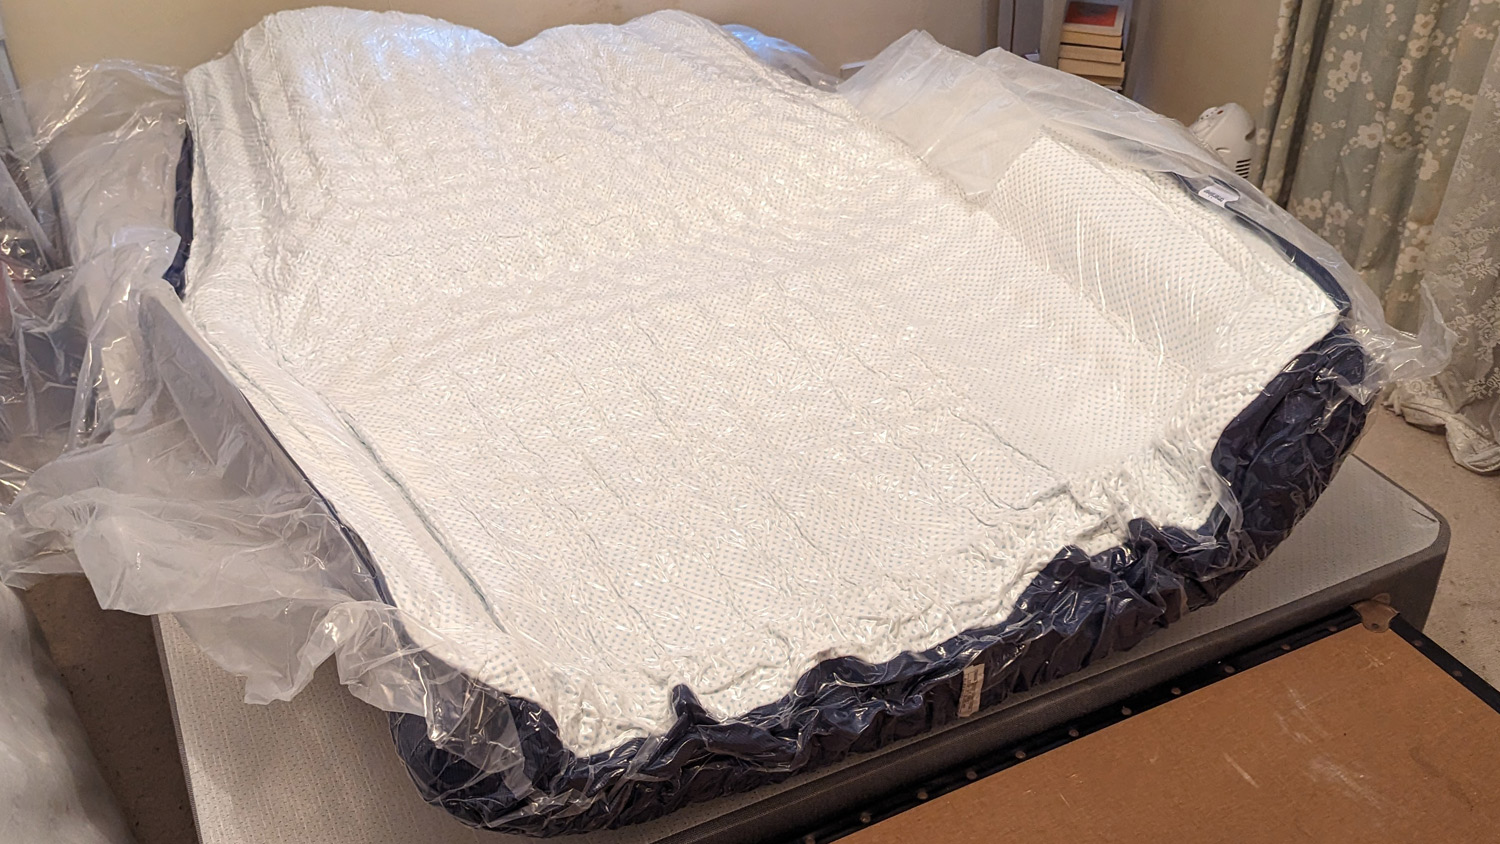 The Amerisleep AS3 Hybrid mattress, still vacuum-packed, on a bed